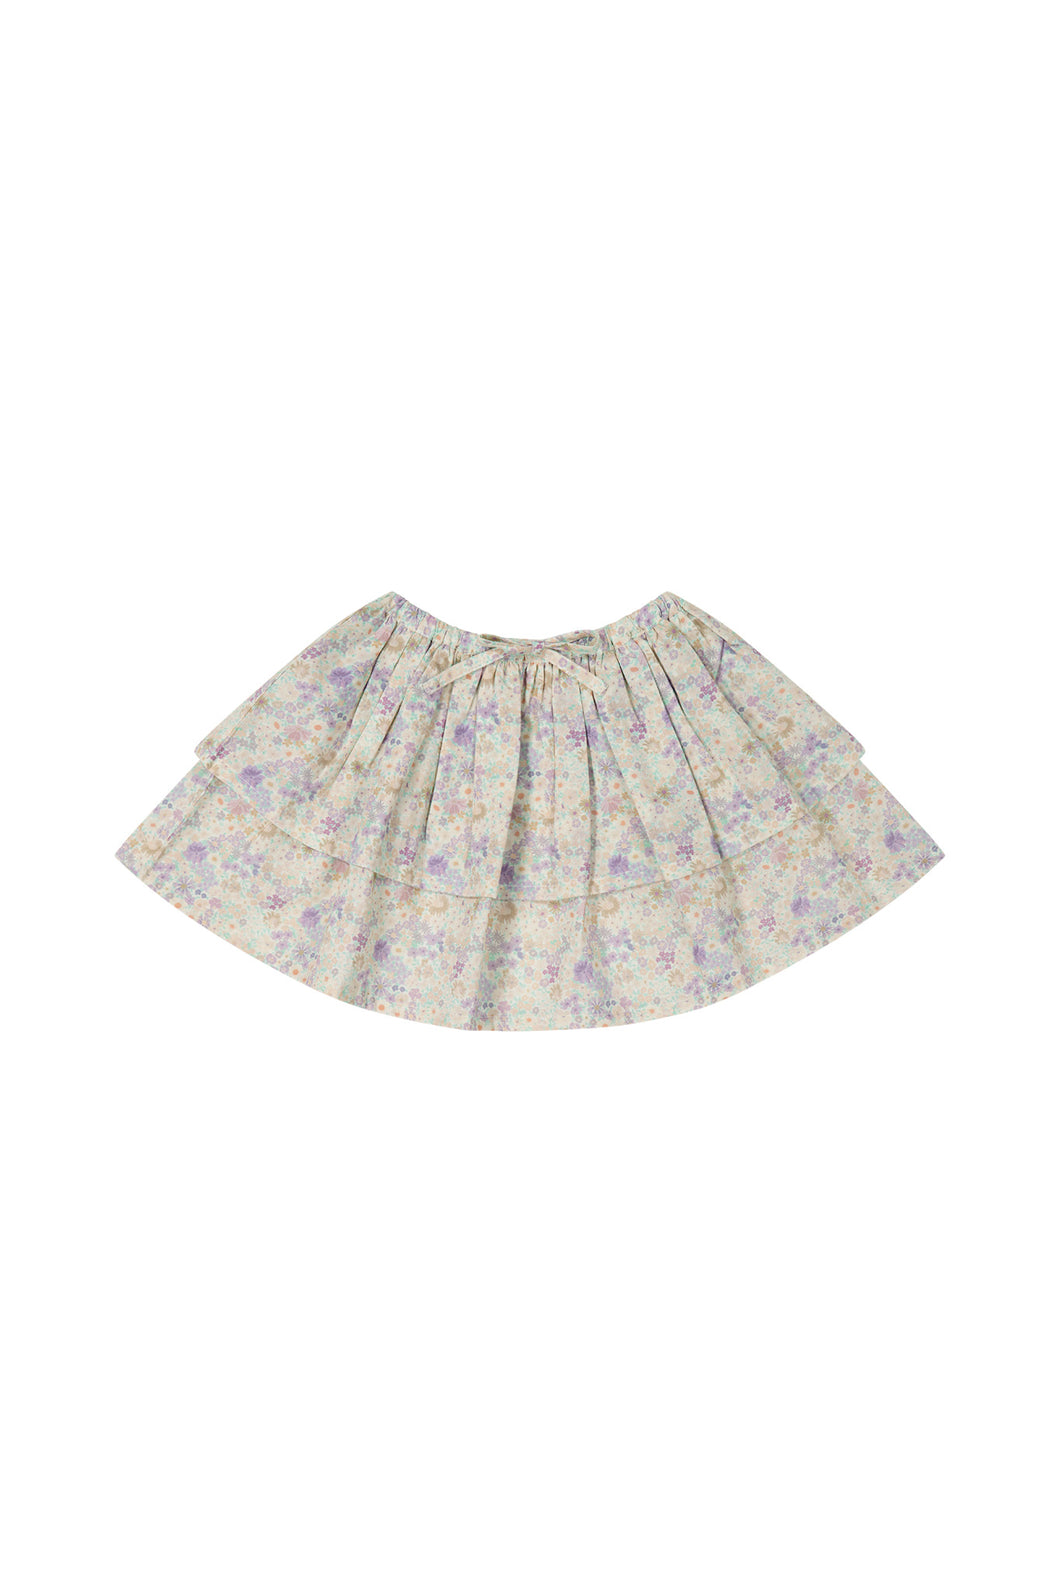 Organic cotton Heidi skirt - mayflower